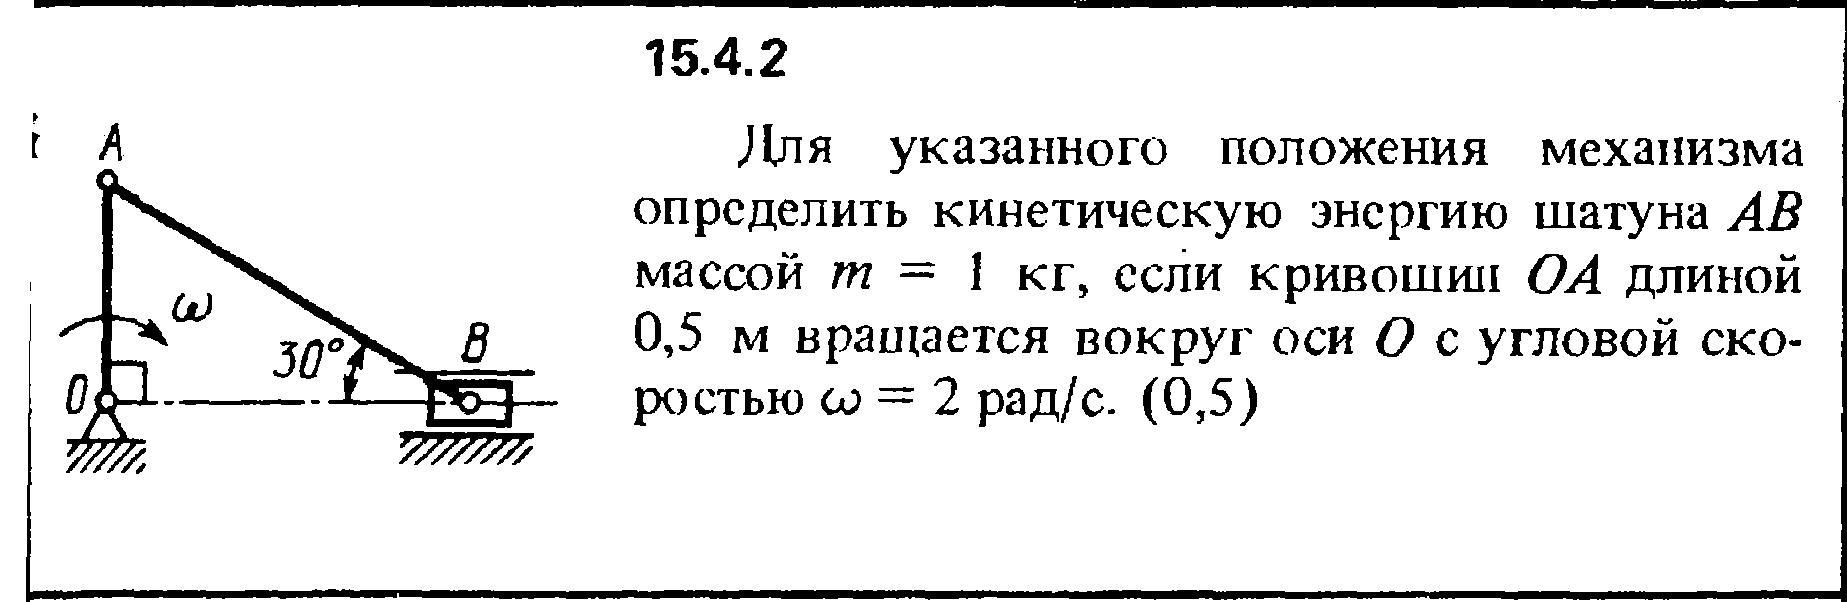 Решение задачи 15.4.2 из сборника Кепе О.Е. 1989 года